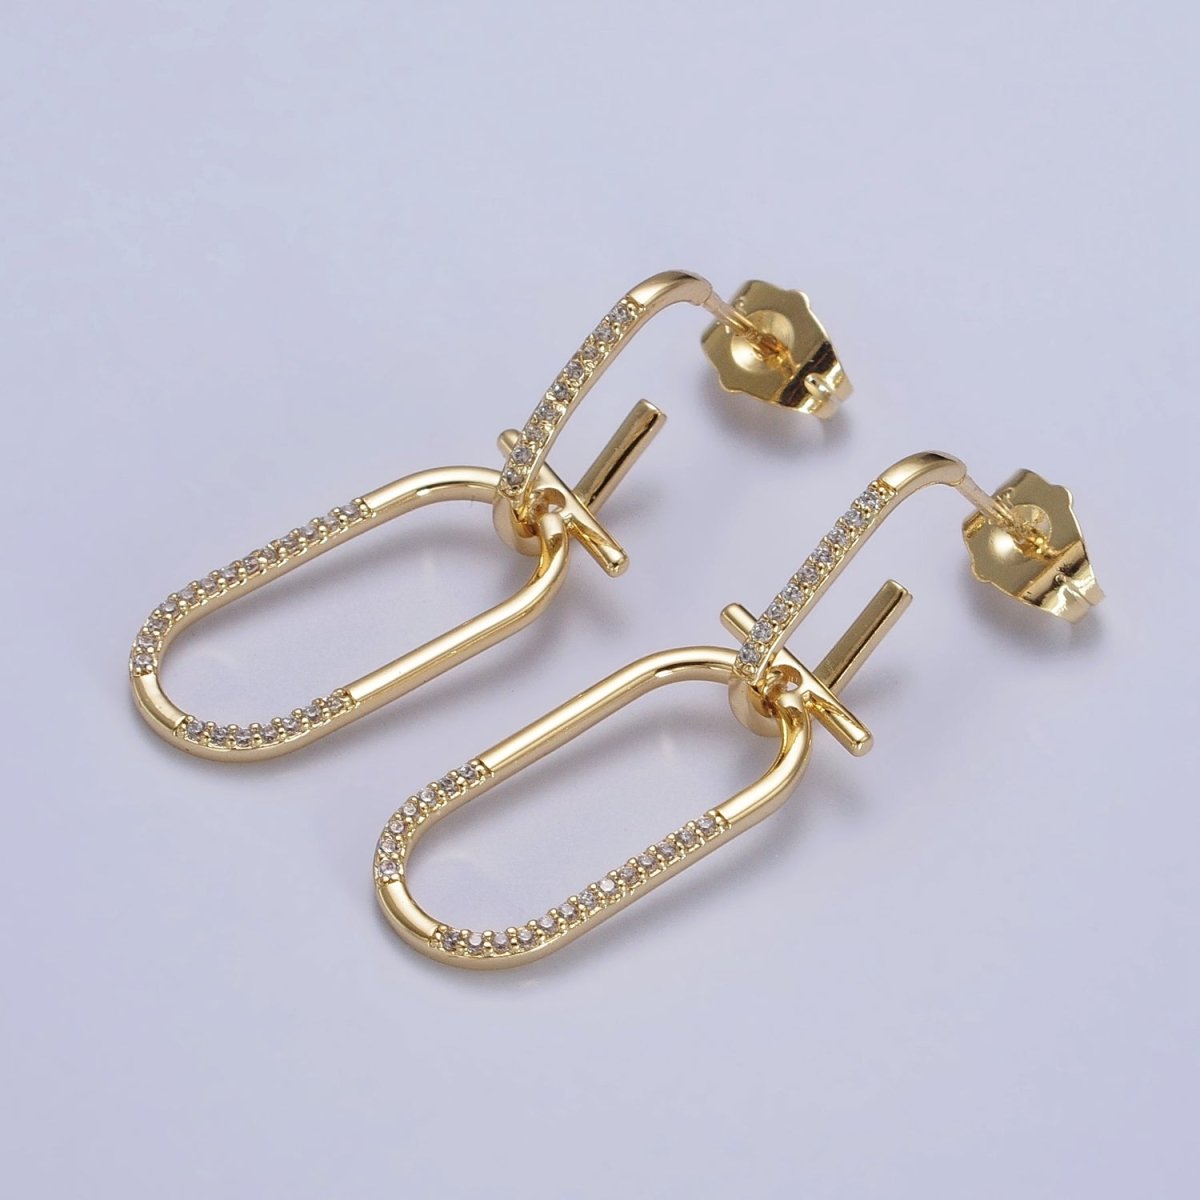 Gold Link Earrings by Oval Cable Link Earrings Statement Dangle CZ Stud Earrings | AB124 - DLUXCA